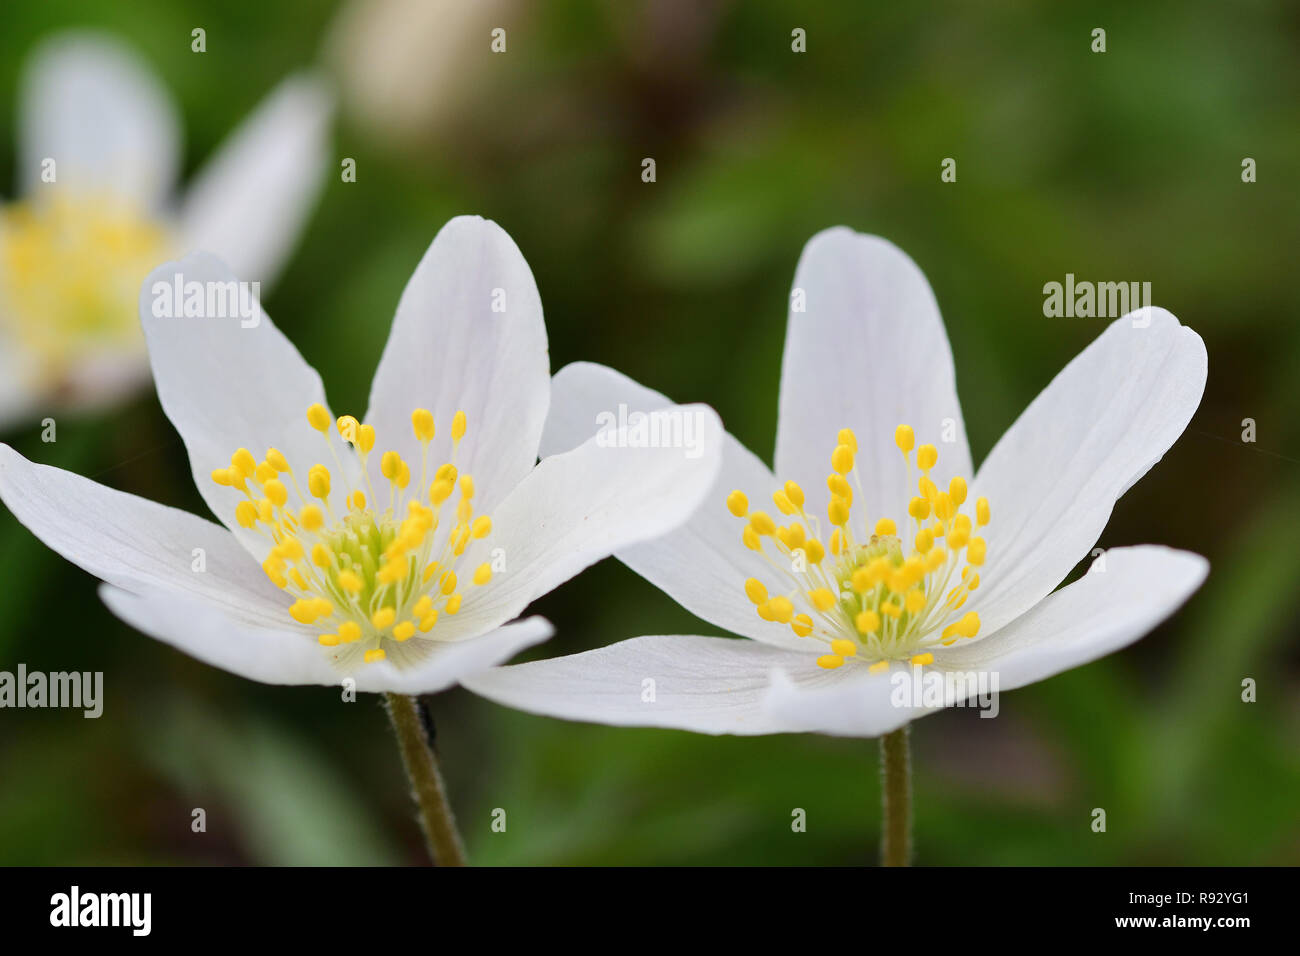 Wood anemones in bloom Stock Photo